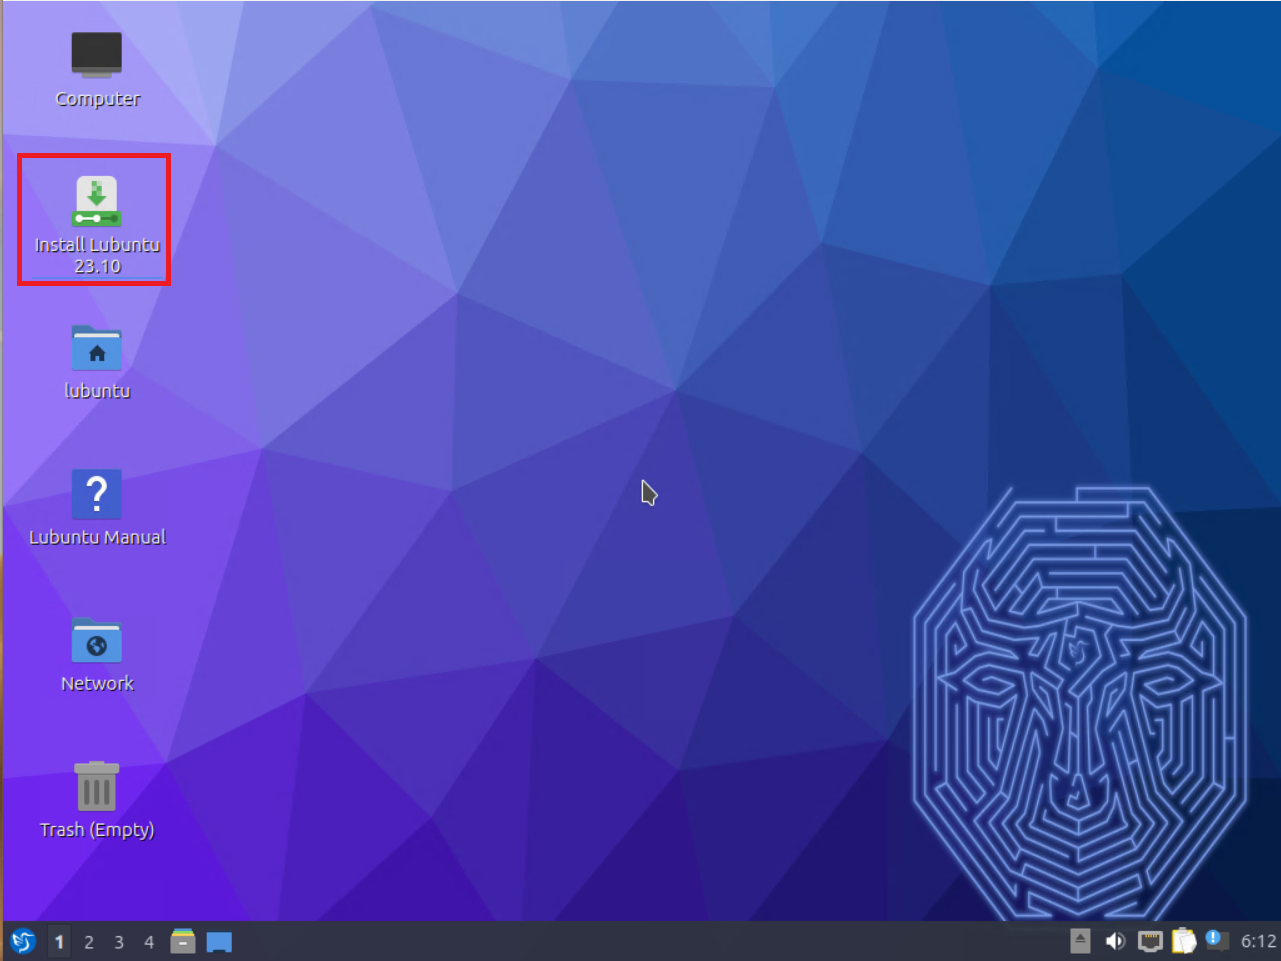 Install Lubuntu 23.10